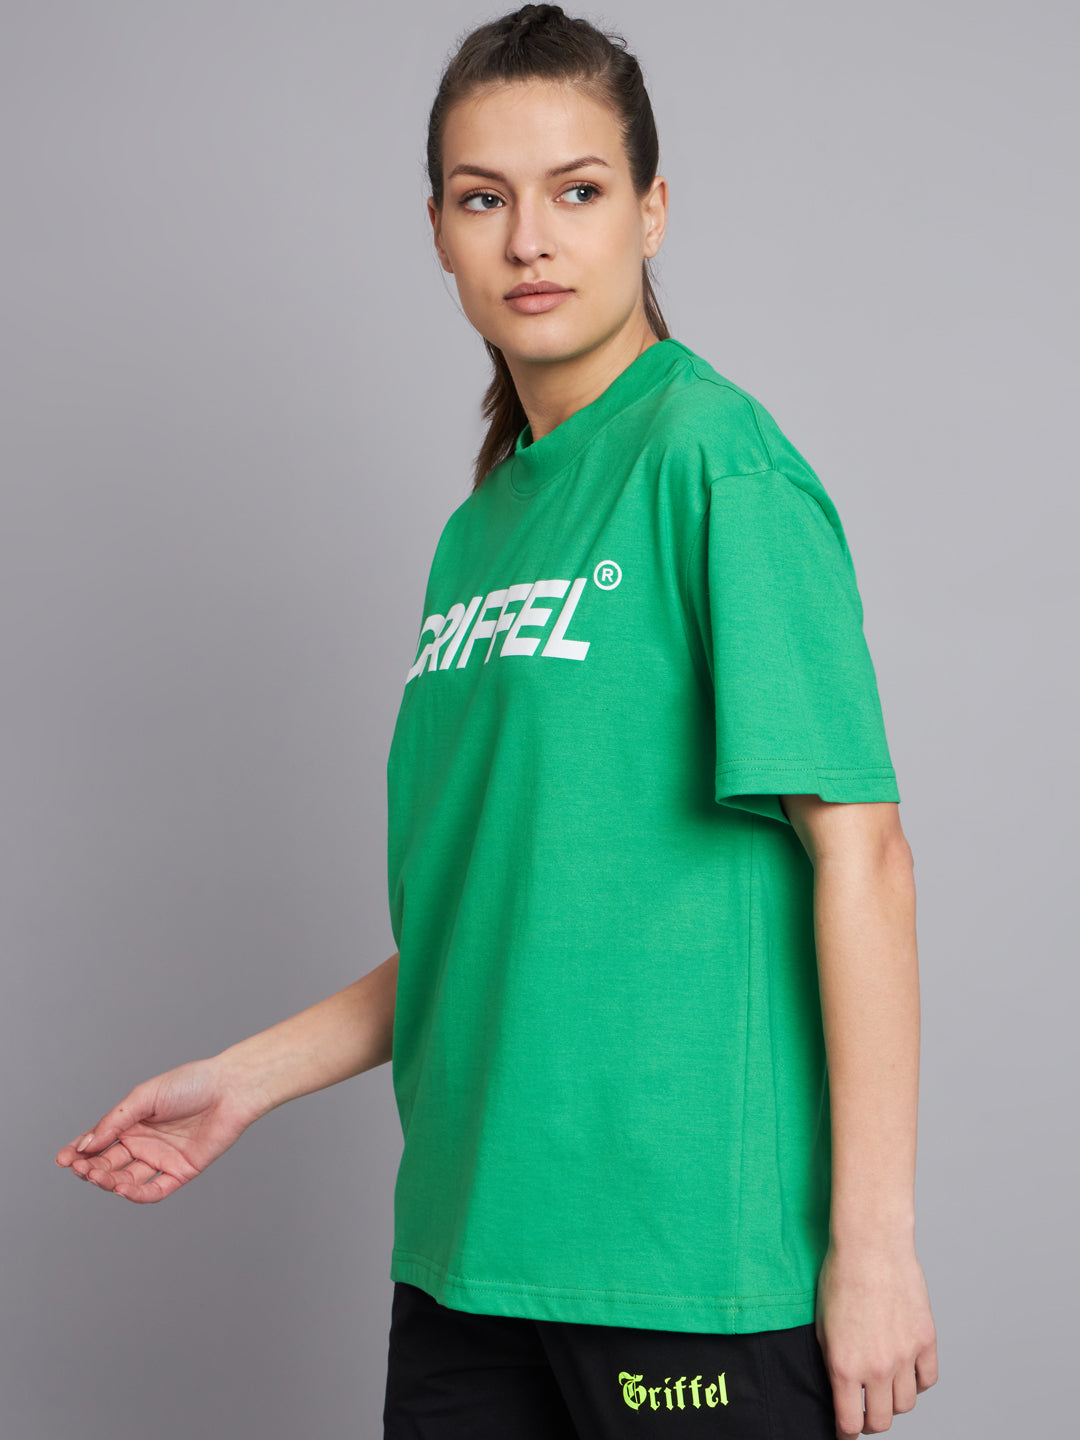 GRIFFEL Women SIGNATURE LOGO oversized Drop Shoulder Neon Green T-shirt - griffel